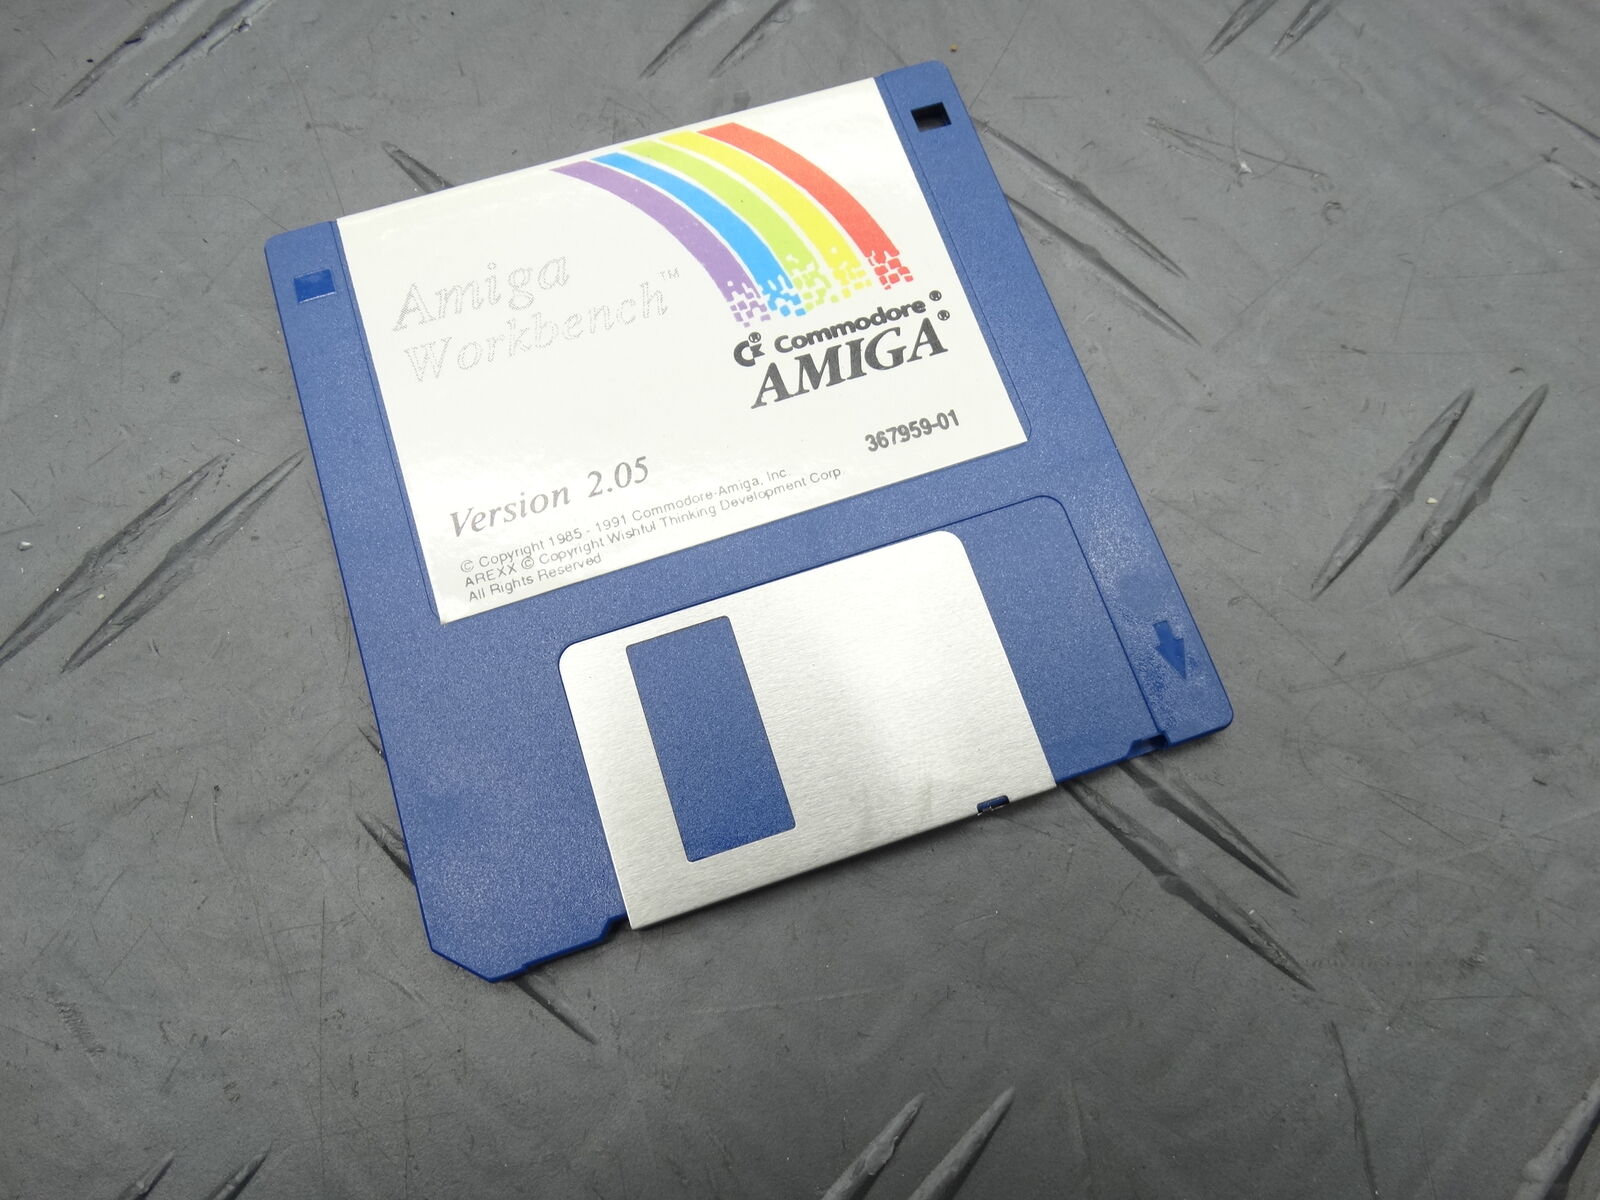 Amiga Workbench Commodore Version 2.05 Floppy Disk